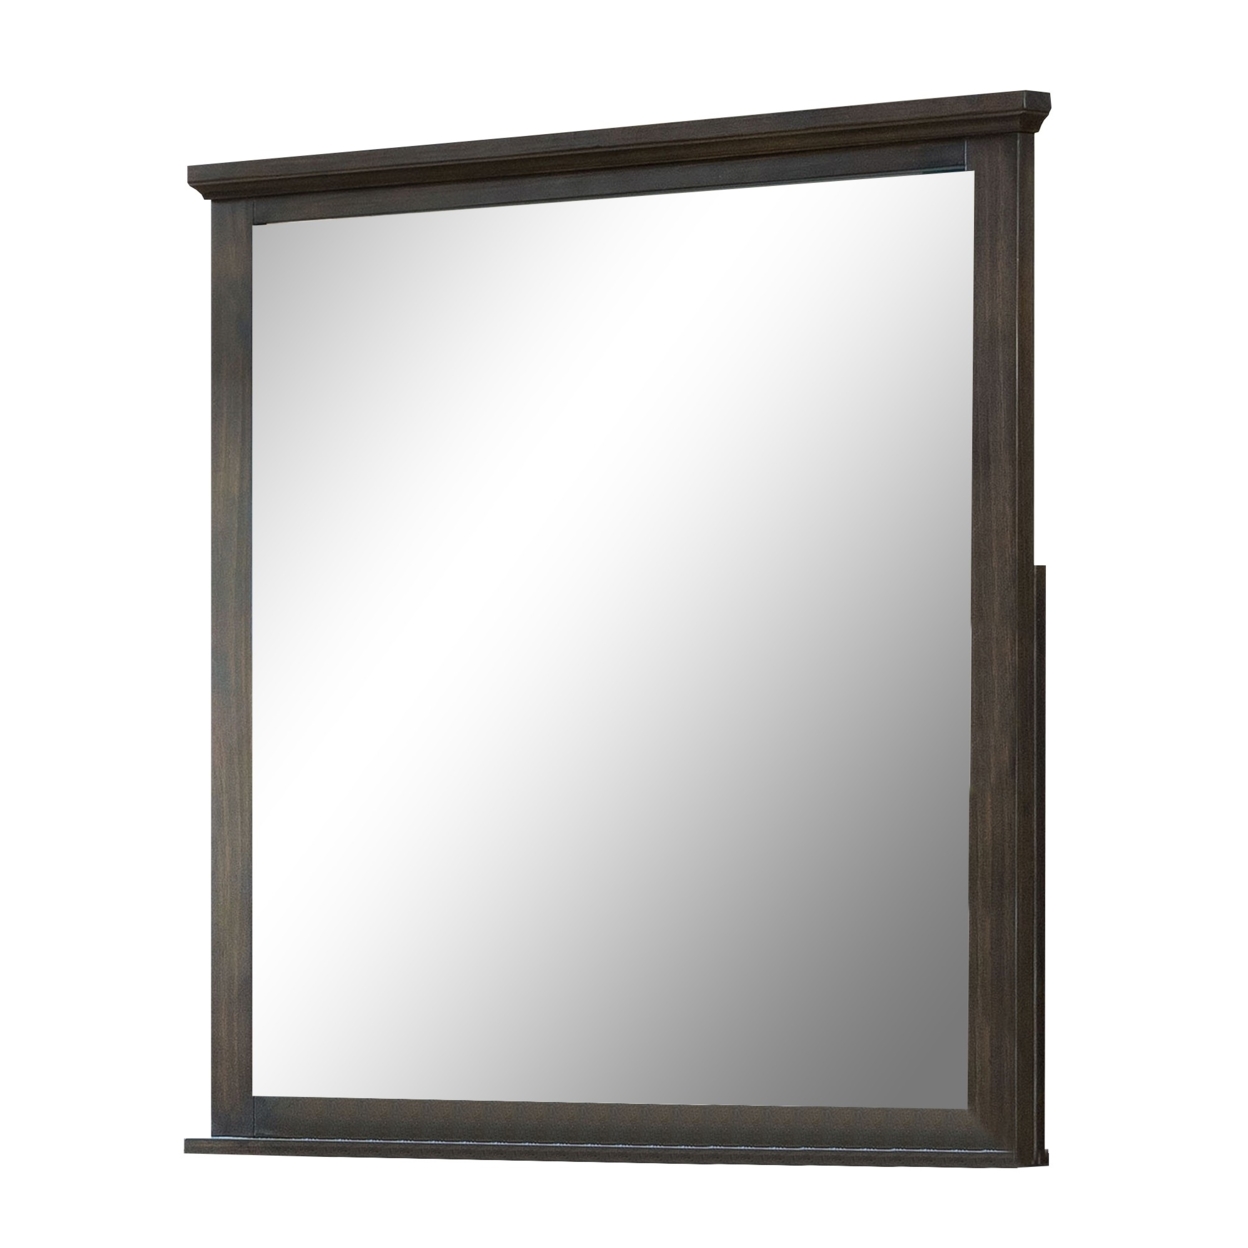 Wooden Frame Mirror With Molded Trim Top, Walnut Brown- Saltoro Sherpi